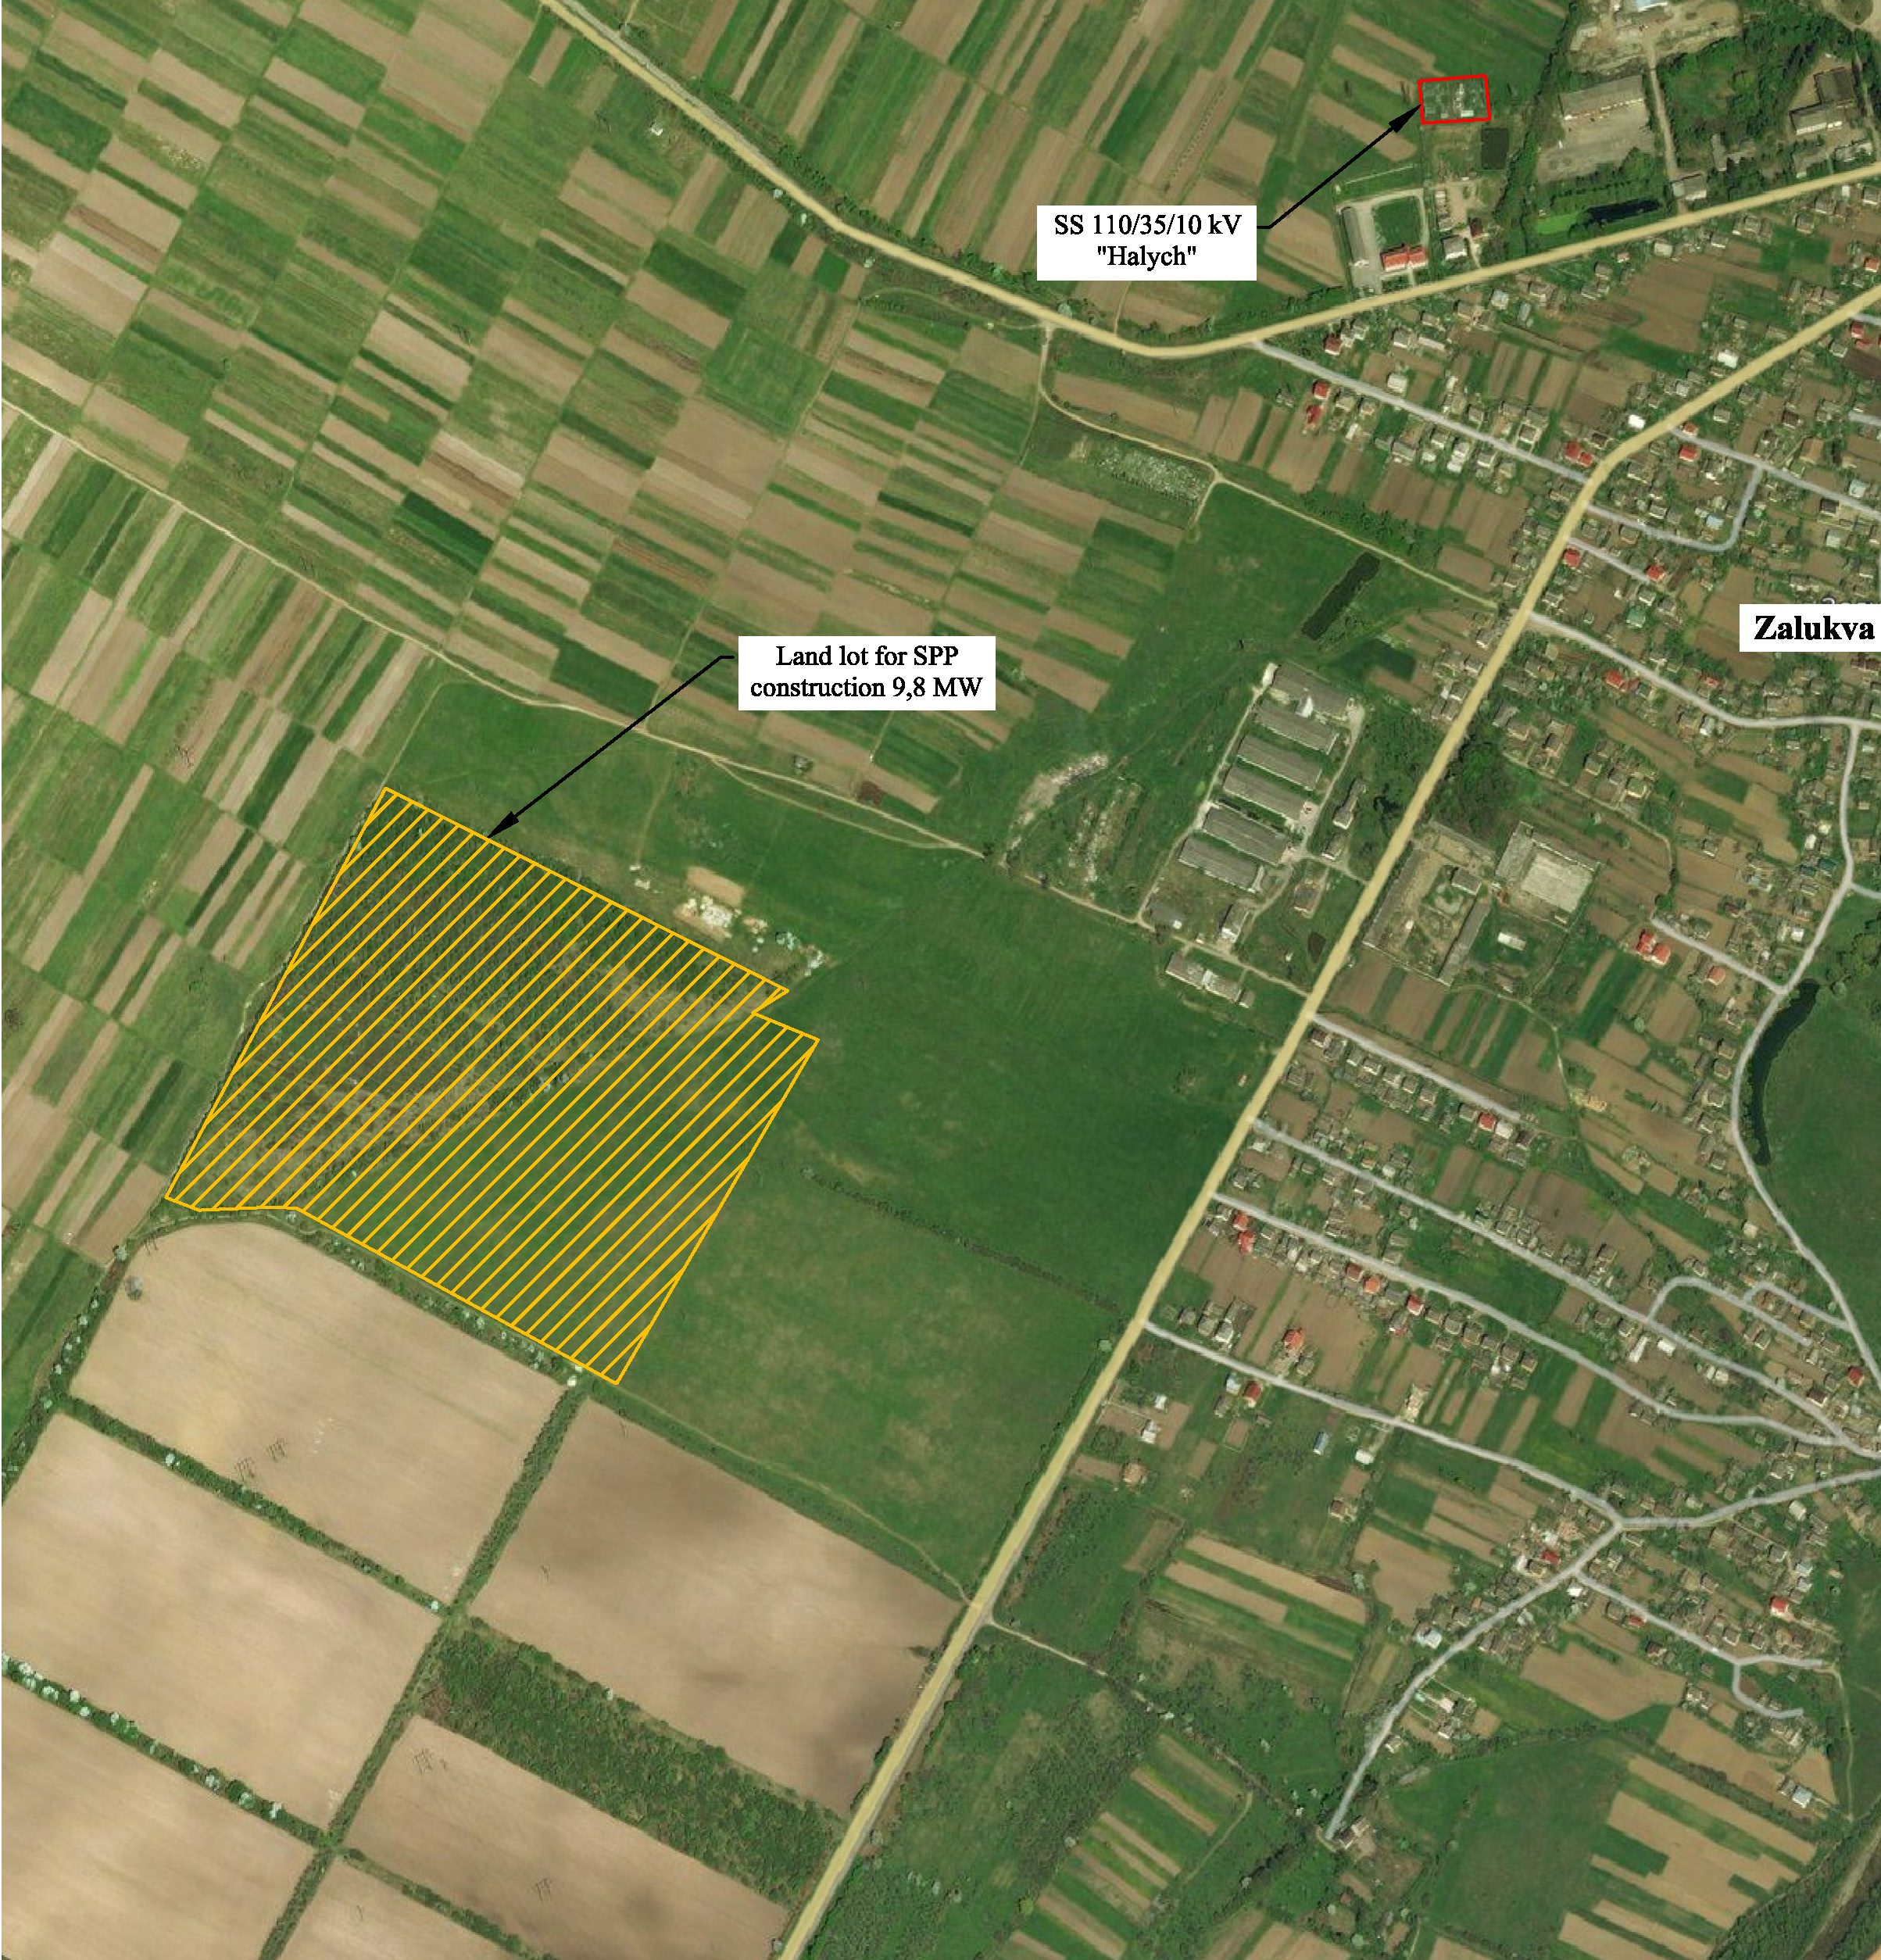 Land lot in Zalukva village